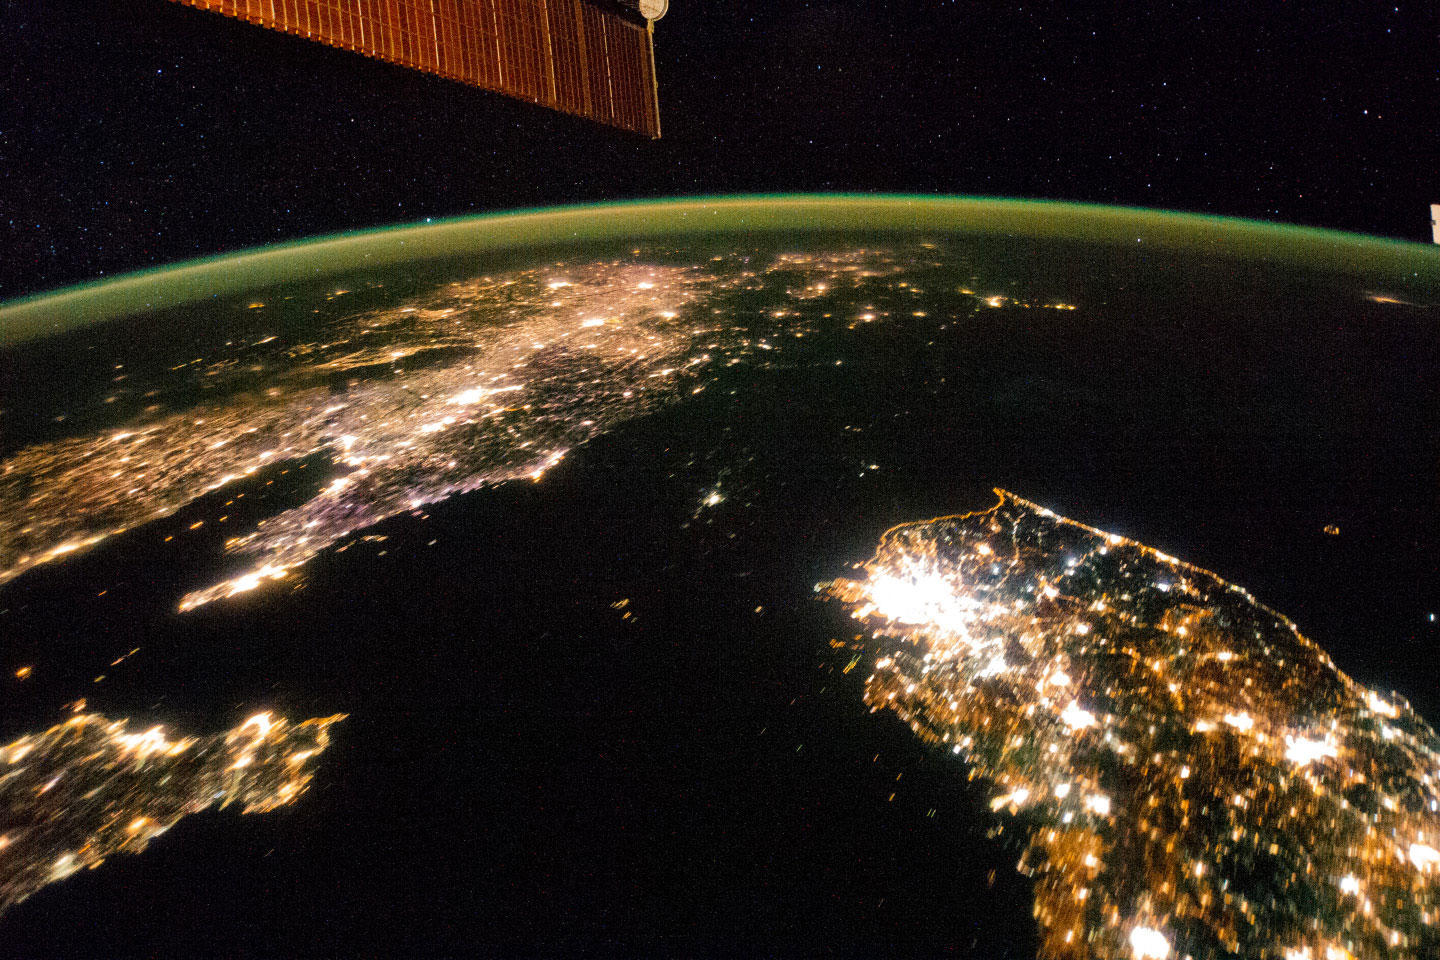  the Korean peninsula, with North Korea mostly dark save for Pyongyang